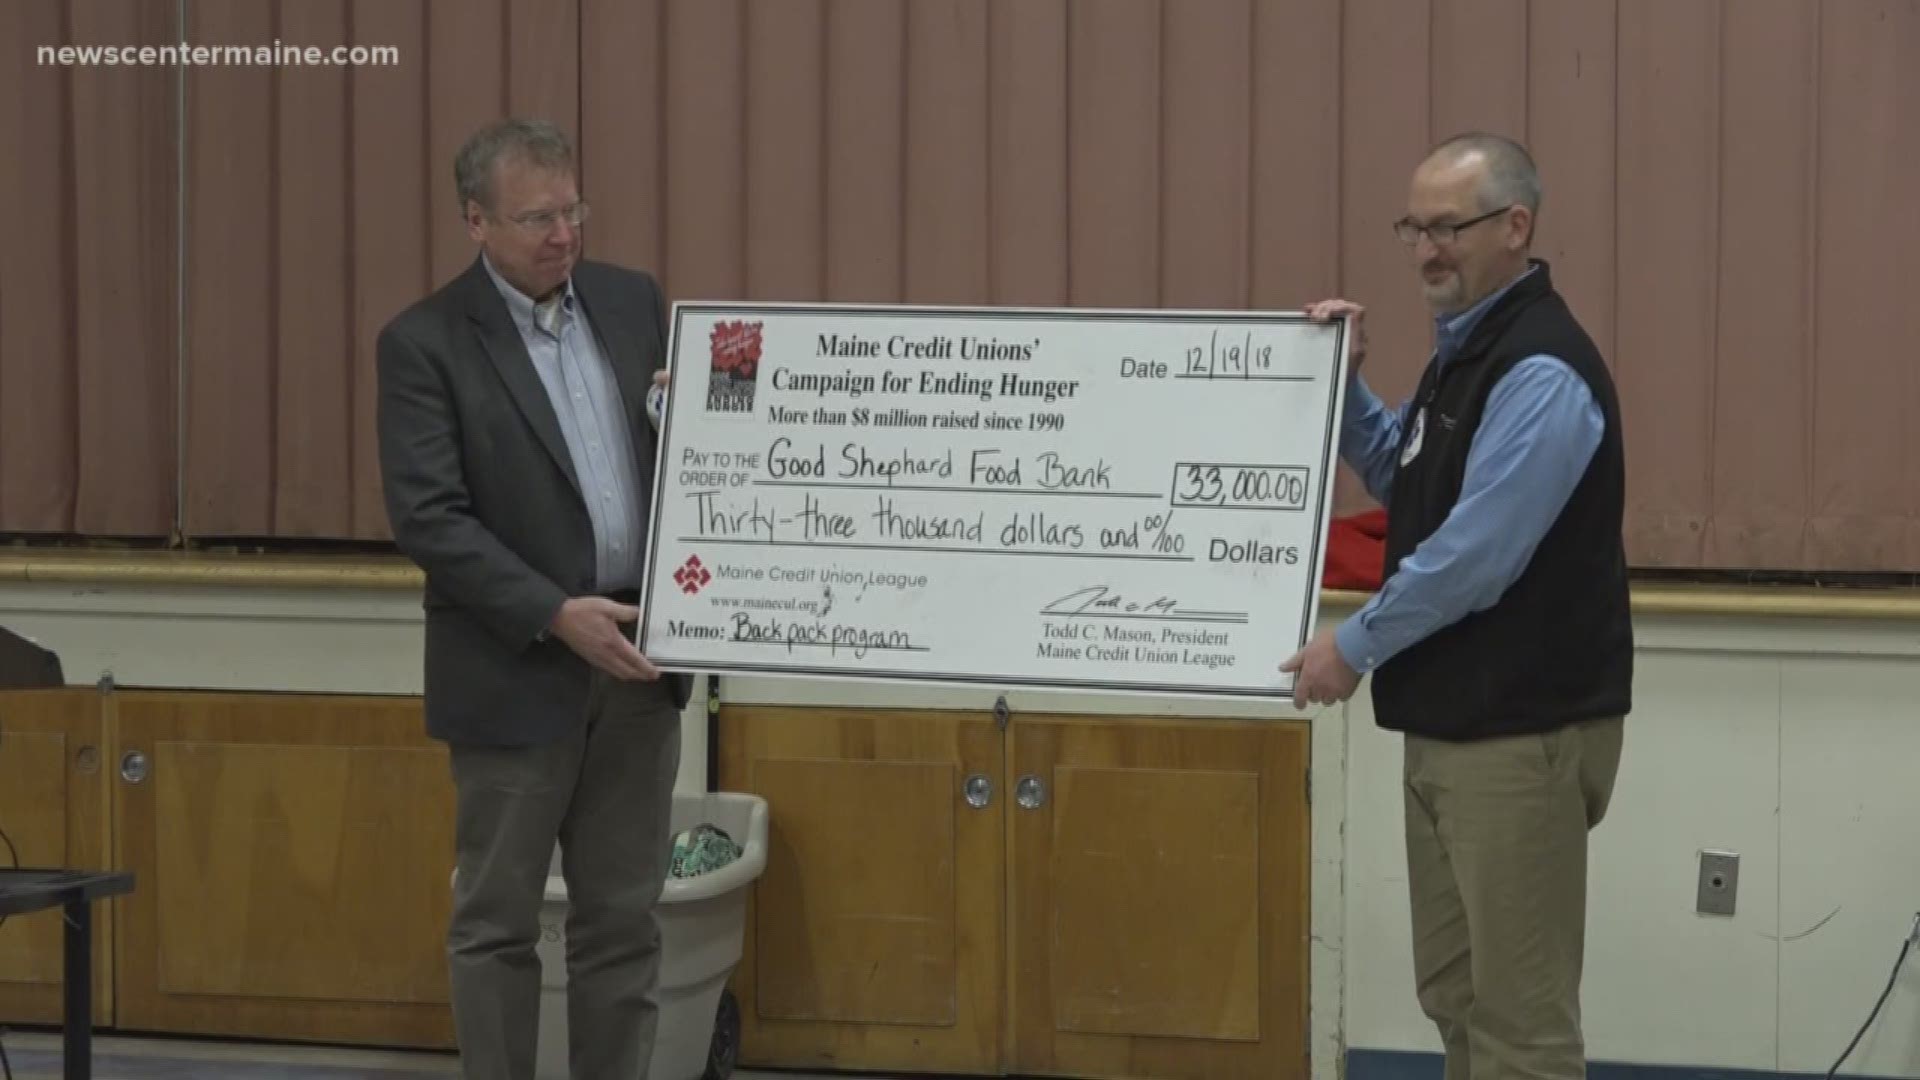 Maine Credit Union League donates 33,000 to the Good Shephard Food bank.